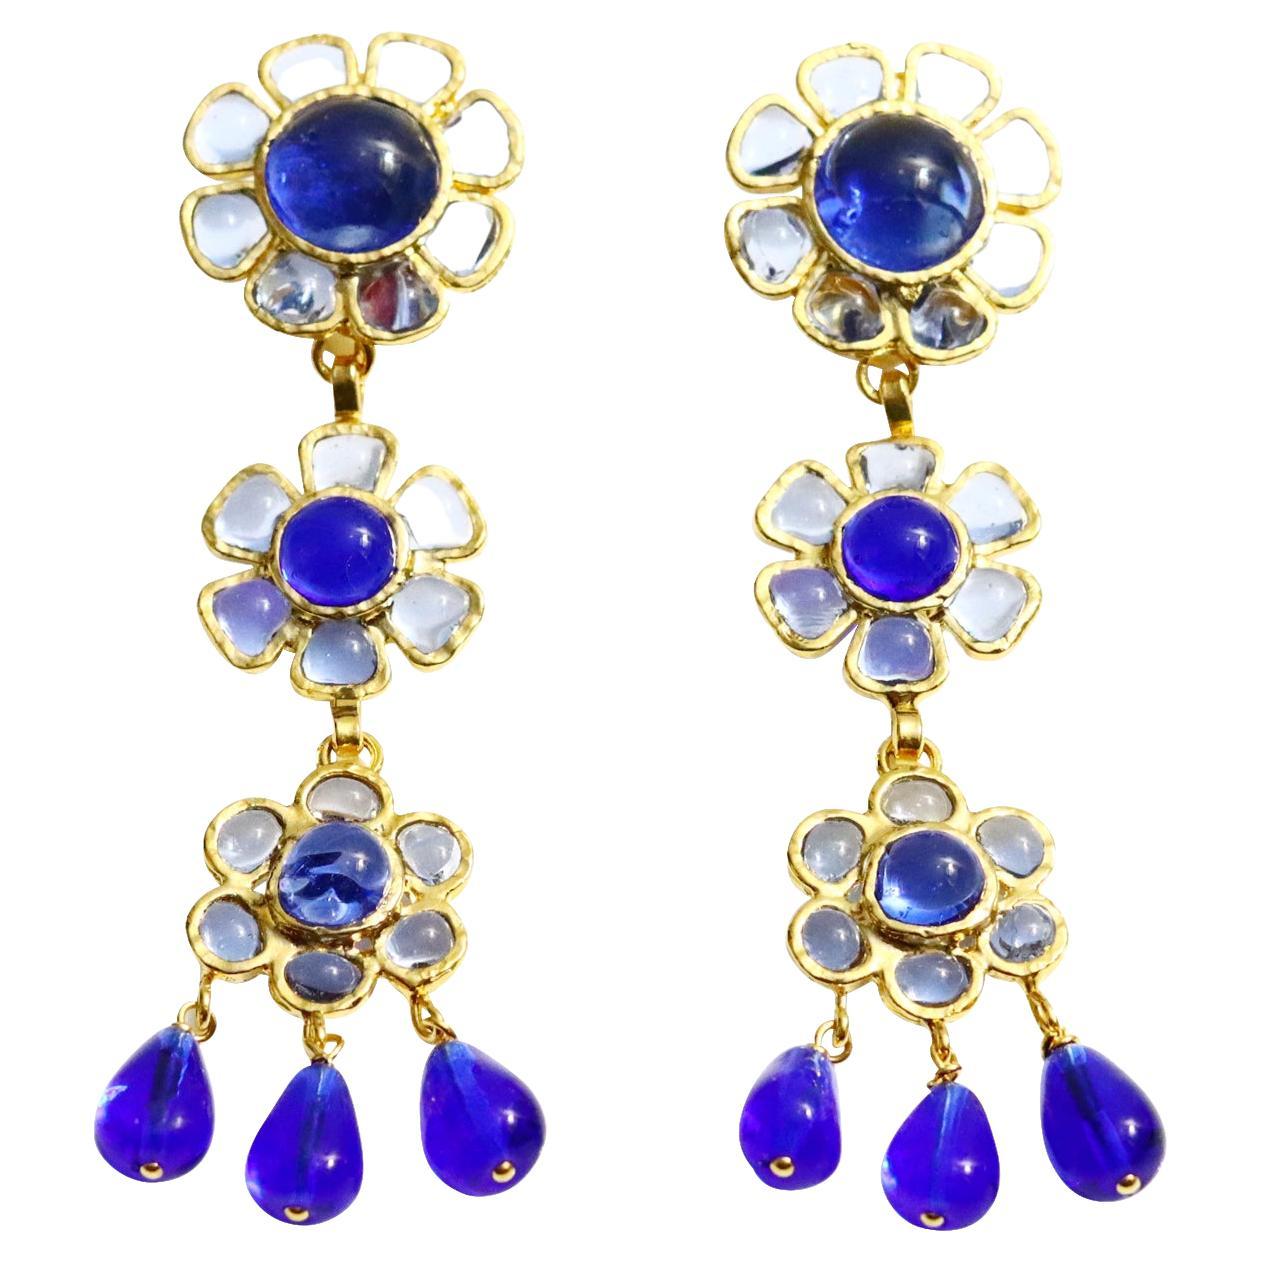 Maison Gripoix Vintage Blue and Light Blue Flower Dangling Earrings